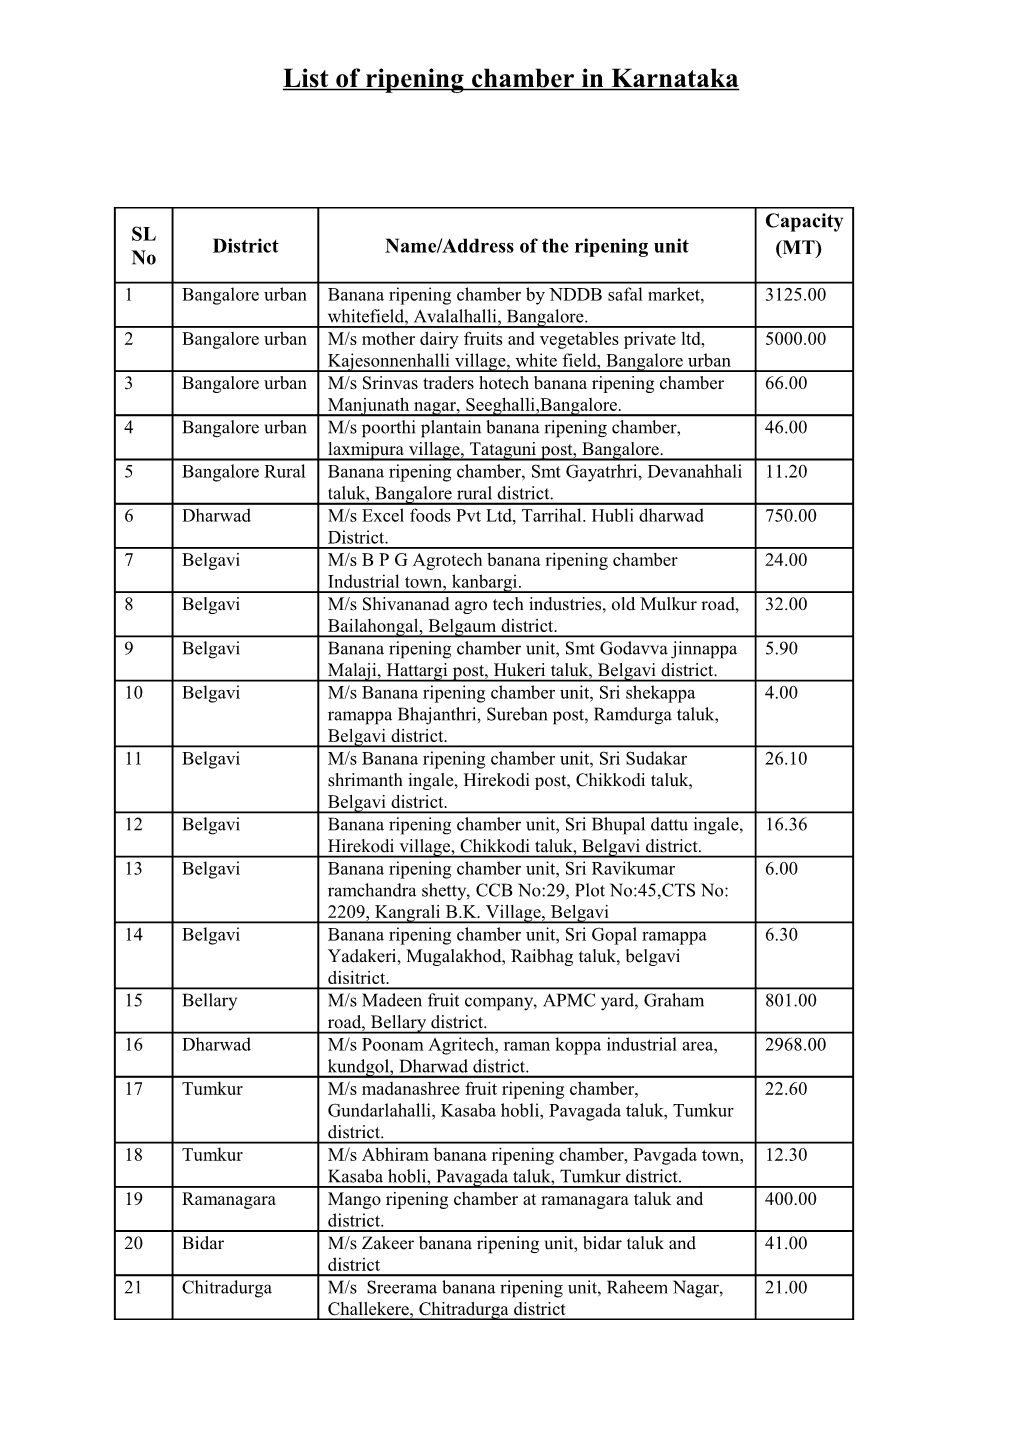 List of Ripening Chamber in Karnataka